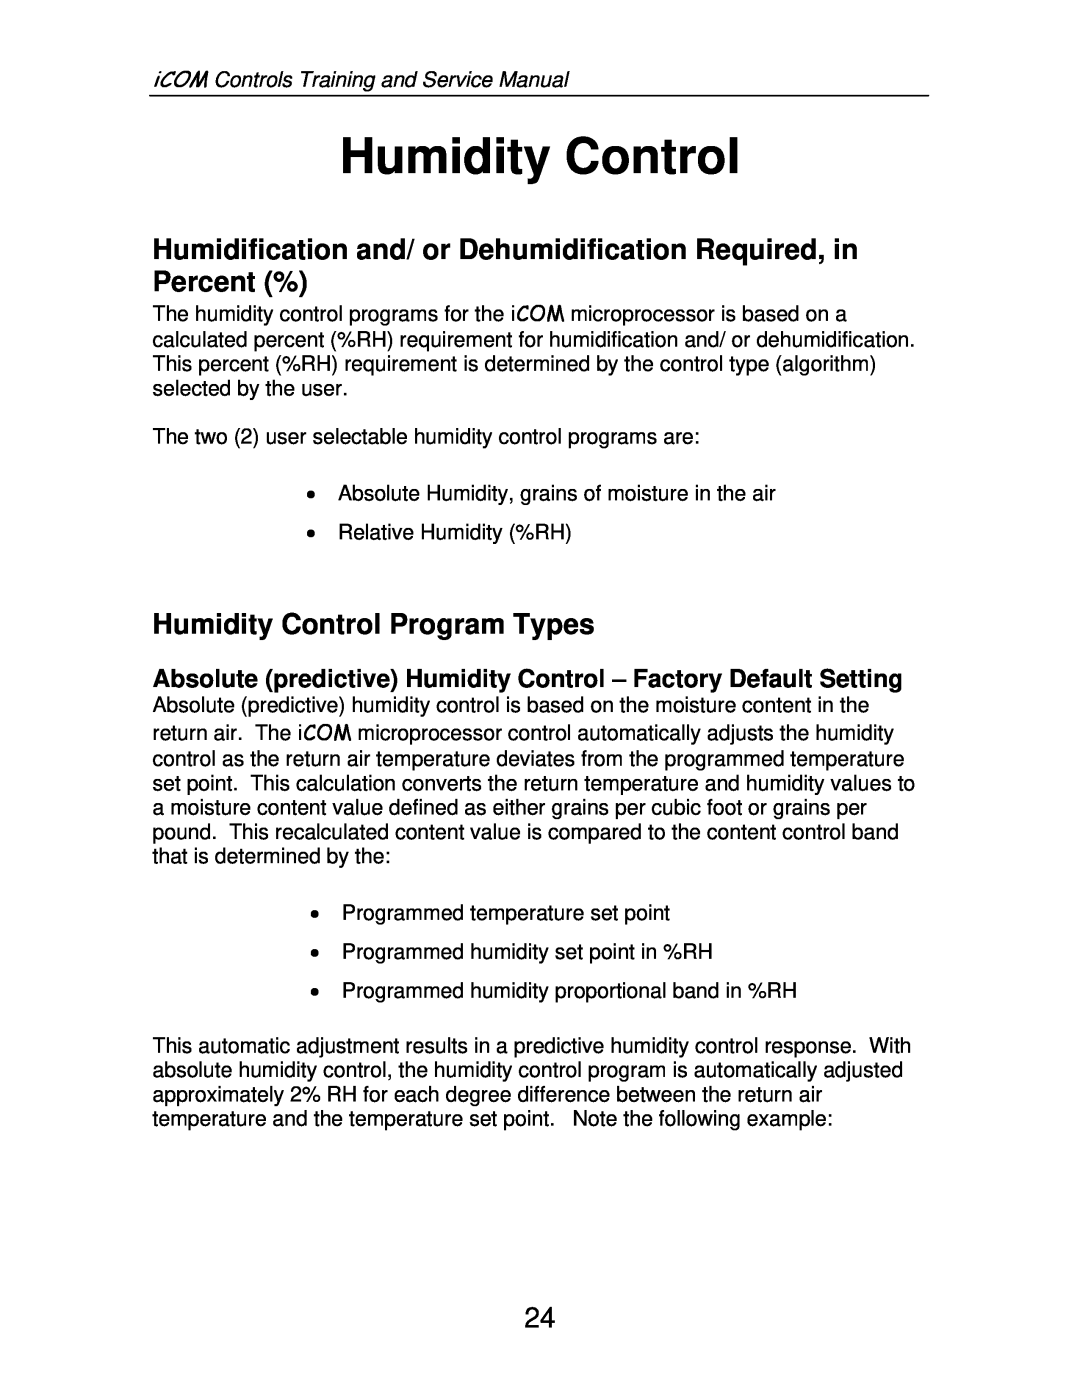 Liebert TM-10098 service manual Humidity Control Program Types 